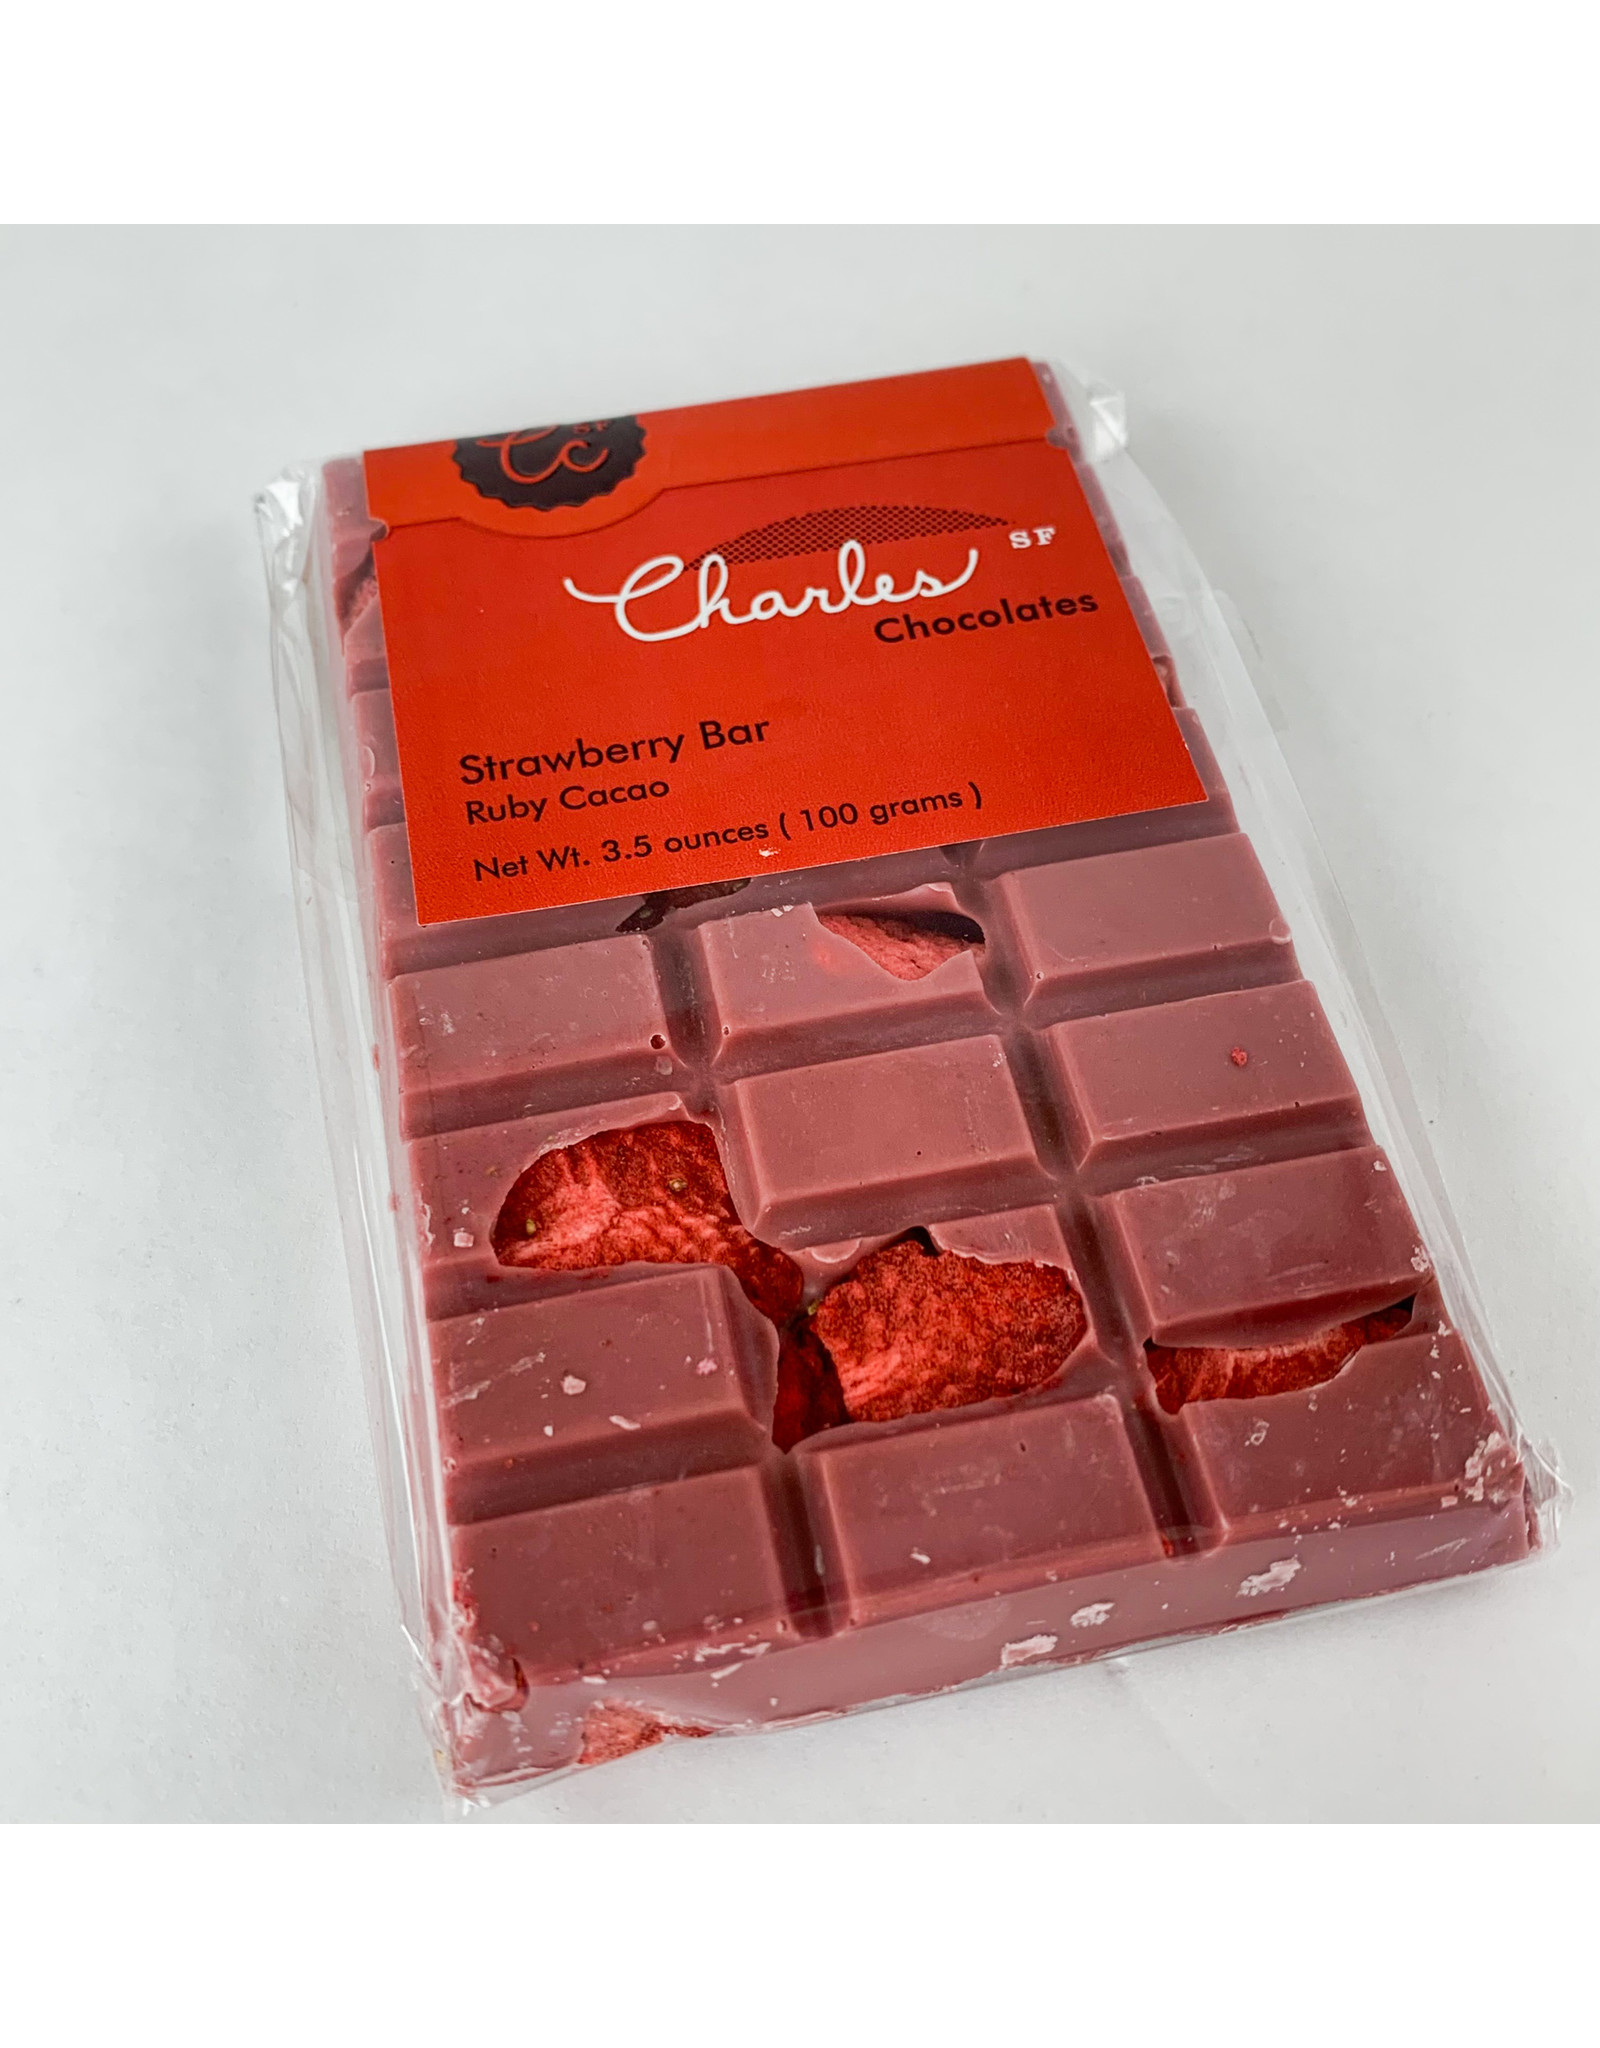 Charles Chocolate Ruby Cacao Strawberry Bar